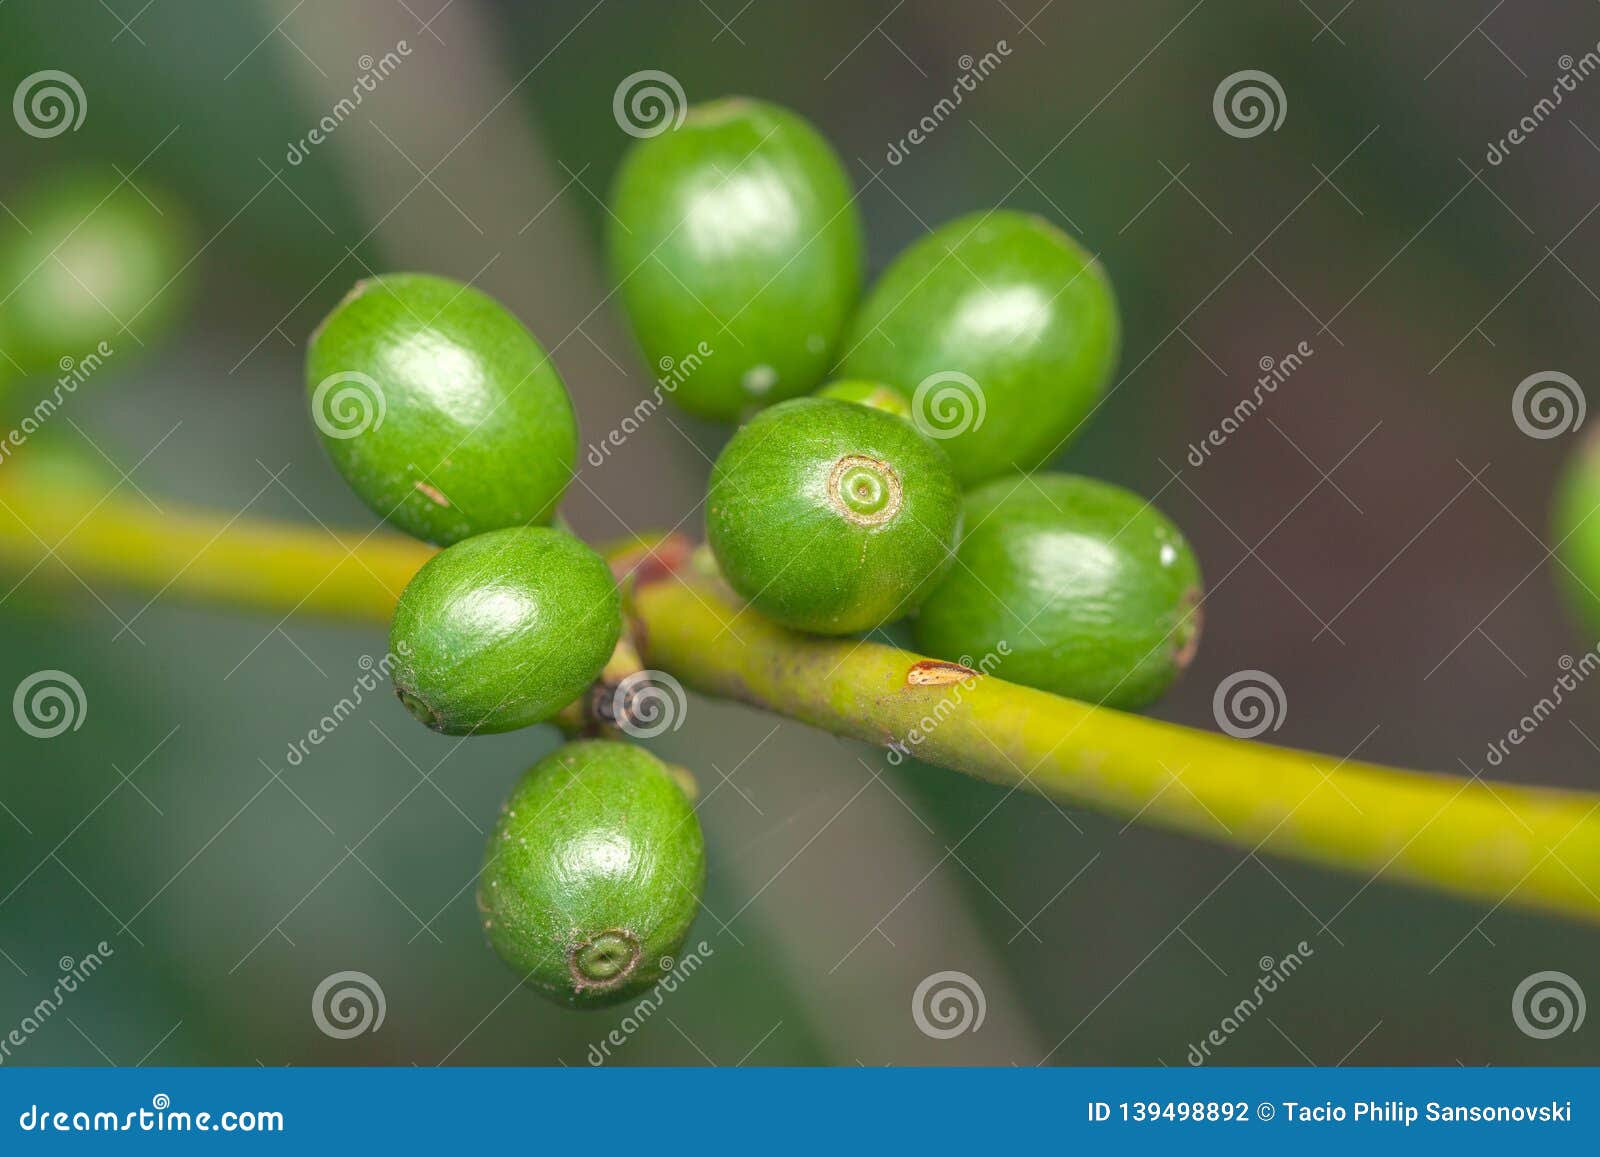 coffee bean green fruits closeup - not mature - coffea arabica